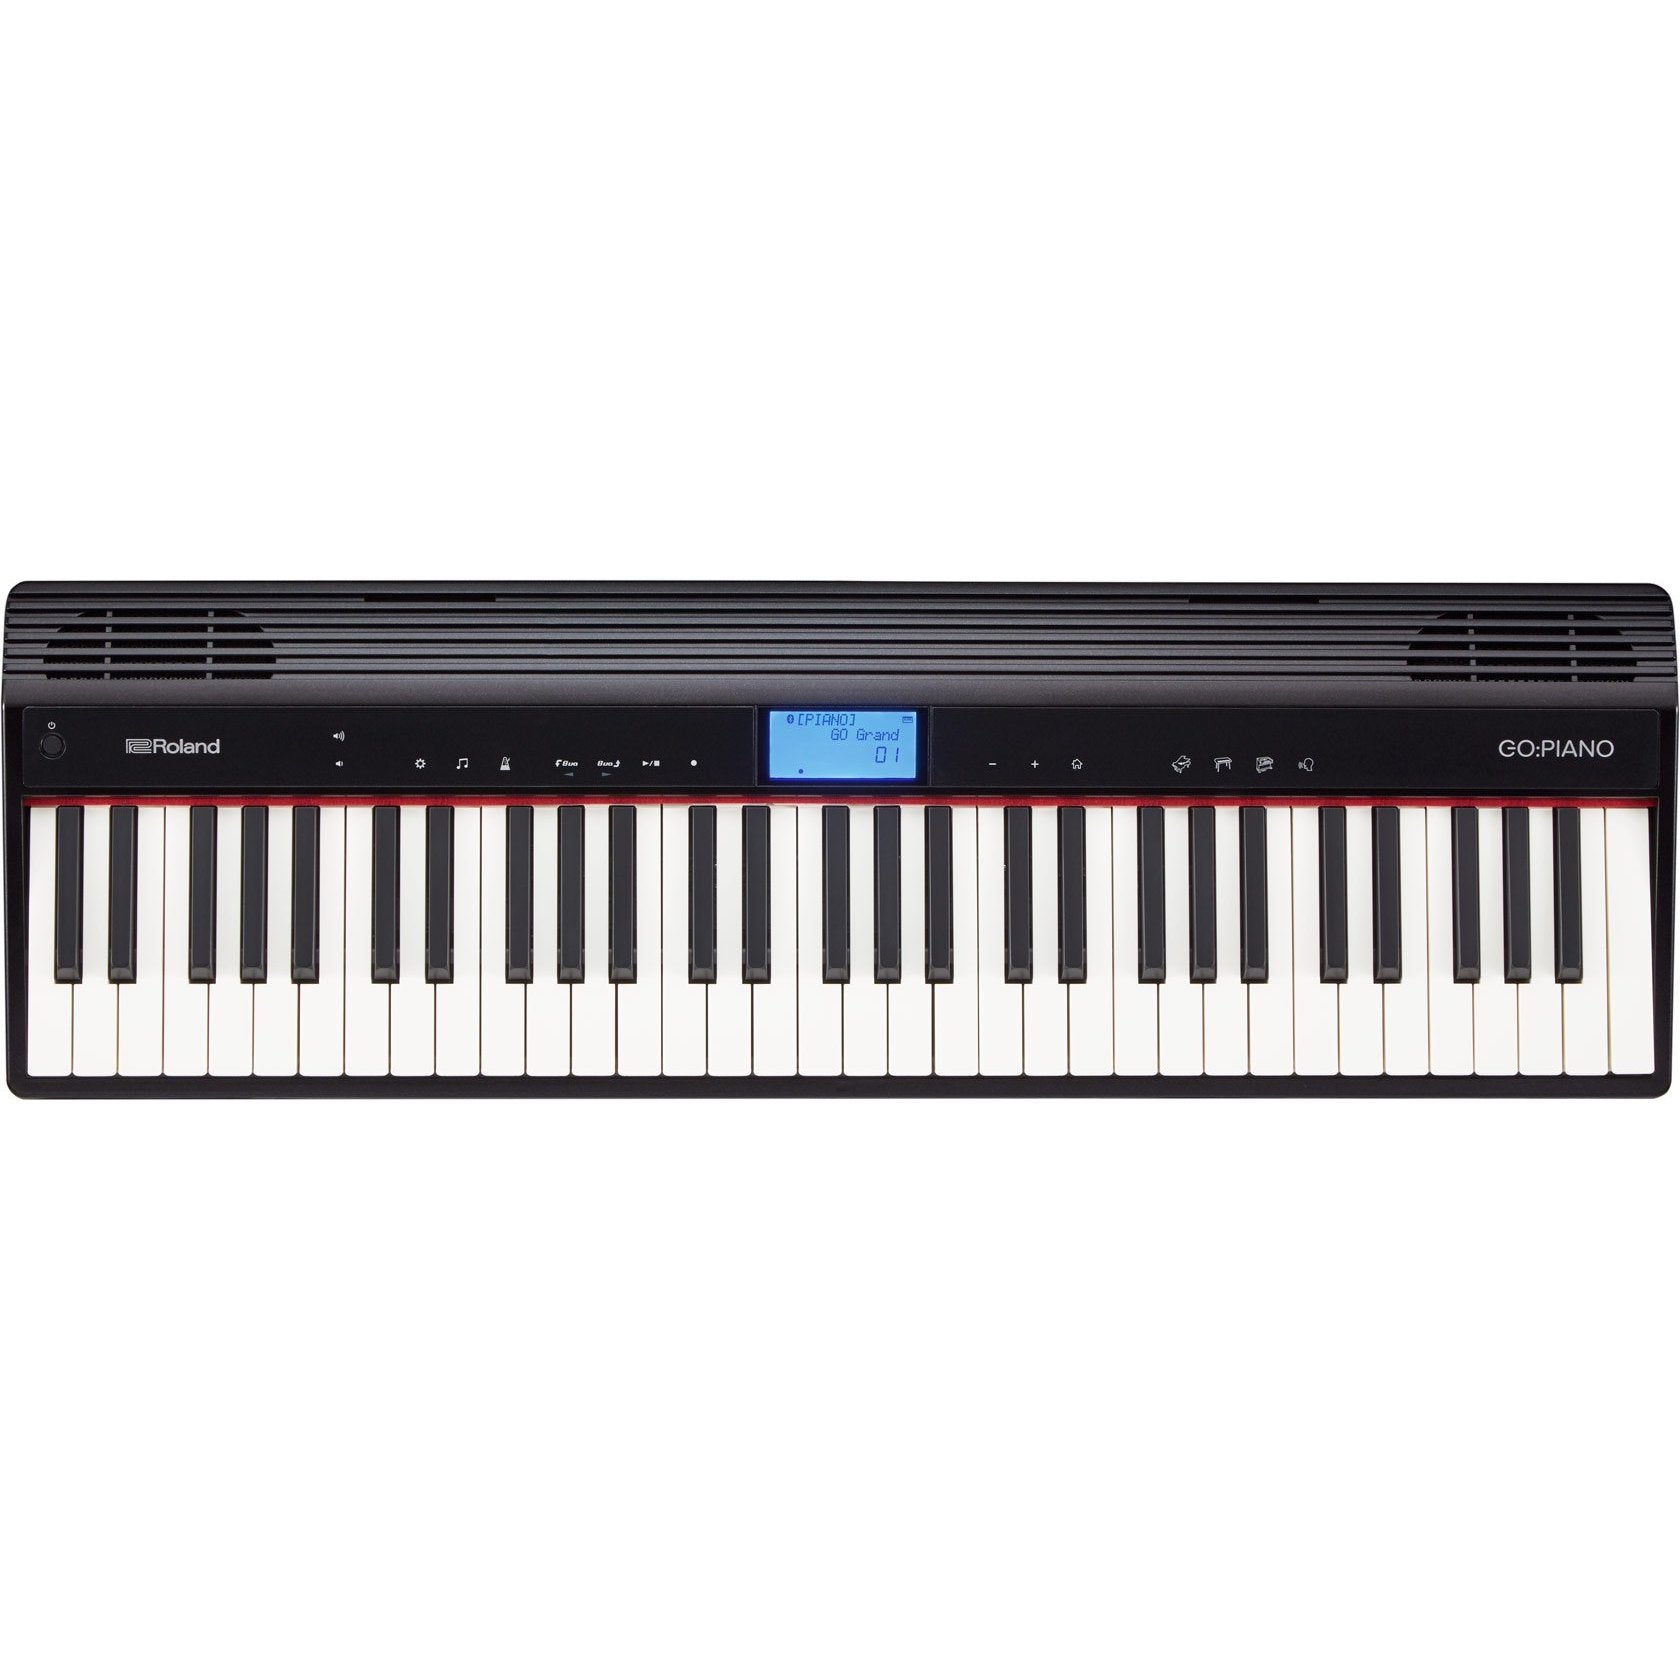 Roland GO:PIANO Digital Piano 61-Keys (Discontinued)-Music World Academy